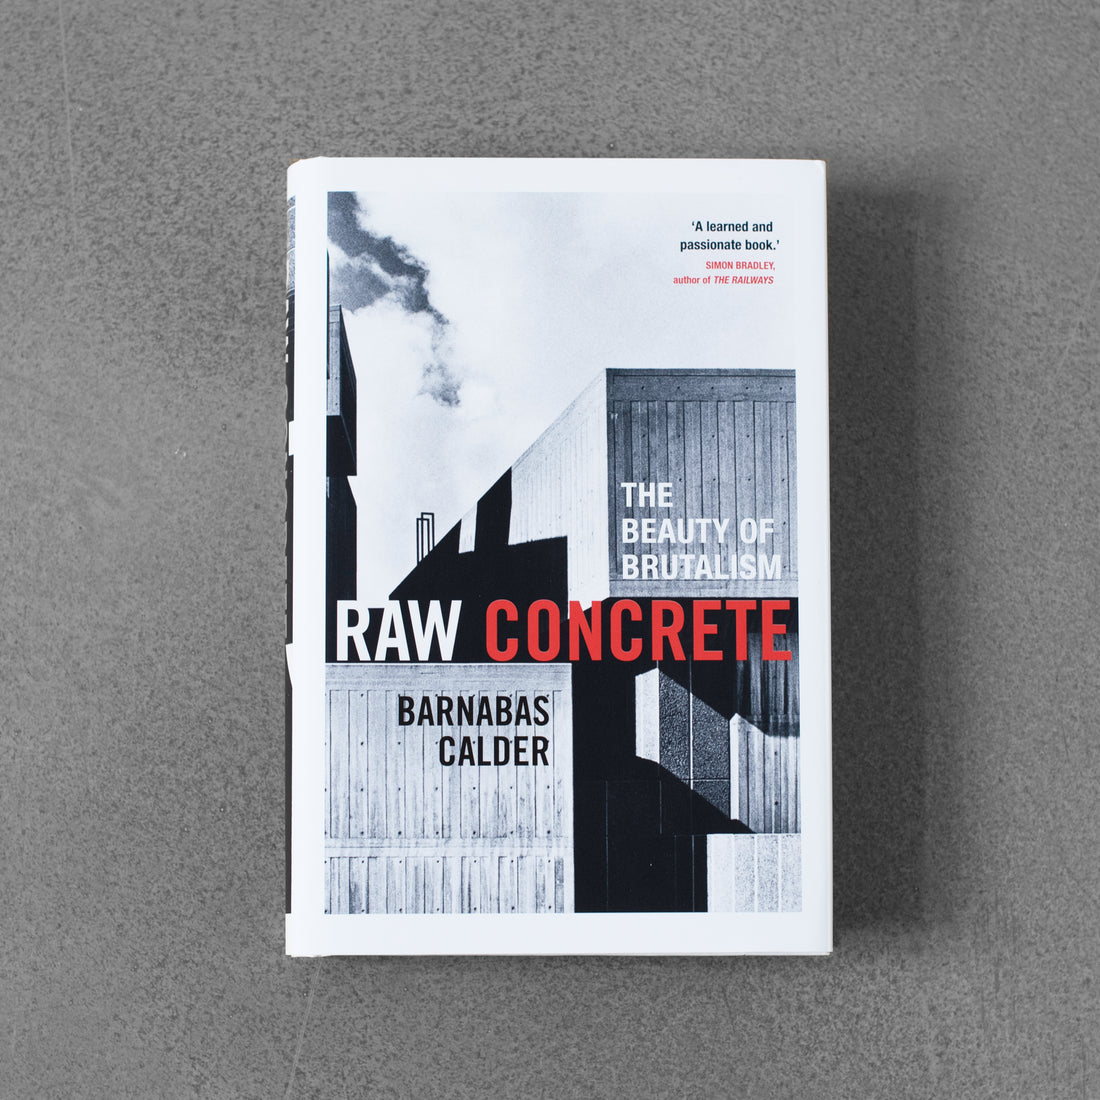 Surowy beton: piękno brutalizmu - Barnabas Calder